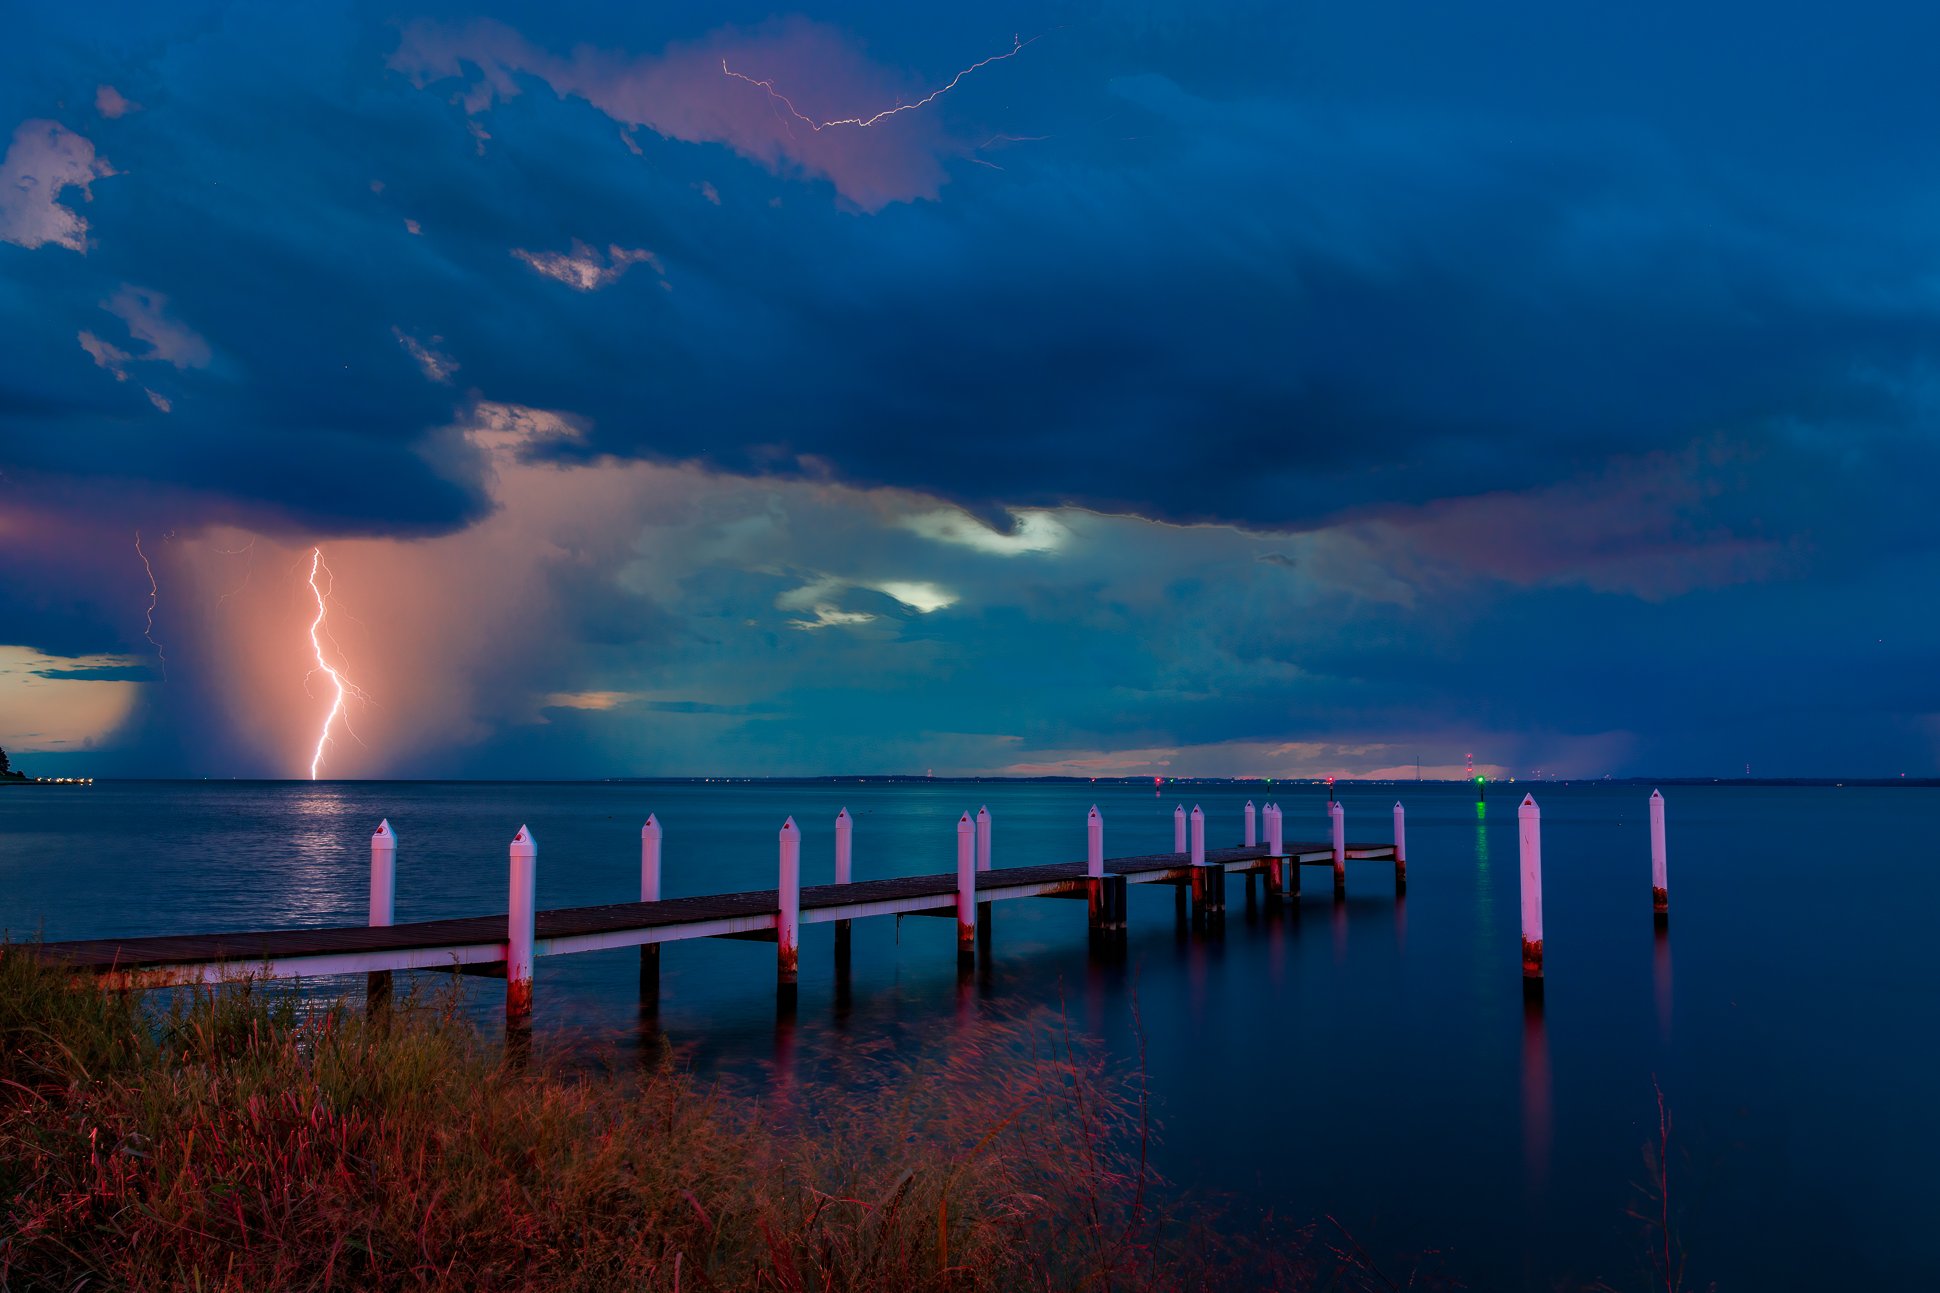 Storm on the Chesapeake Bay - HM